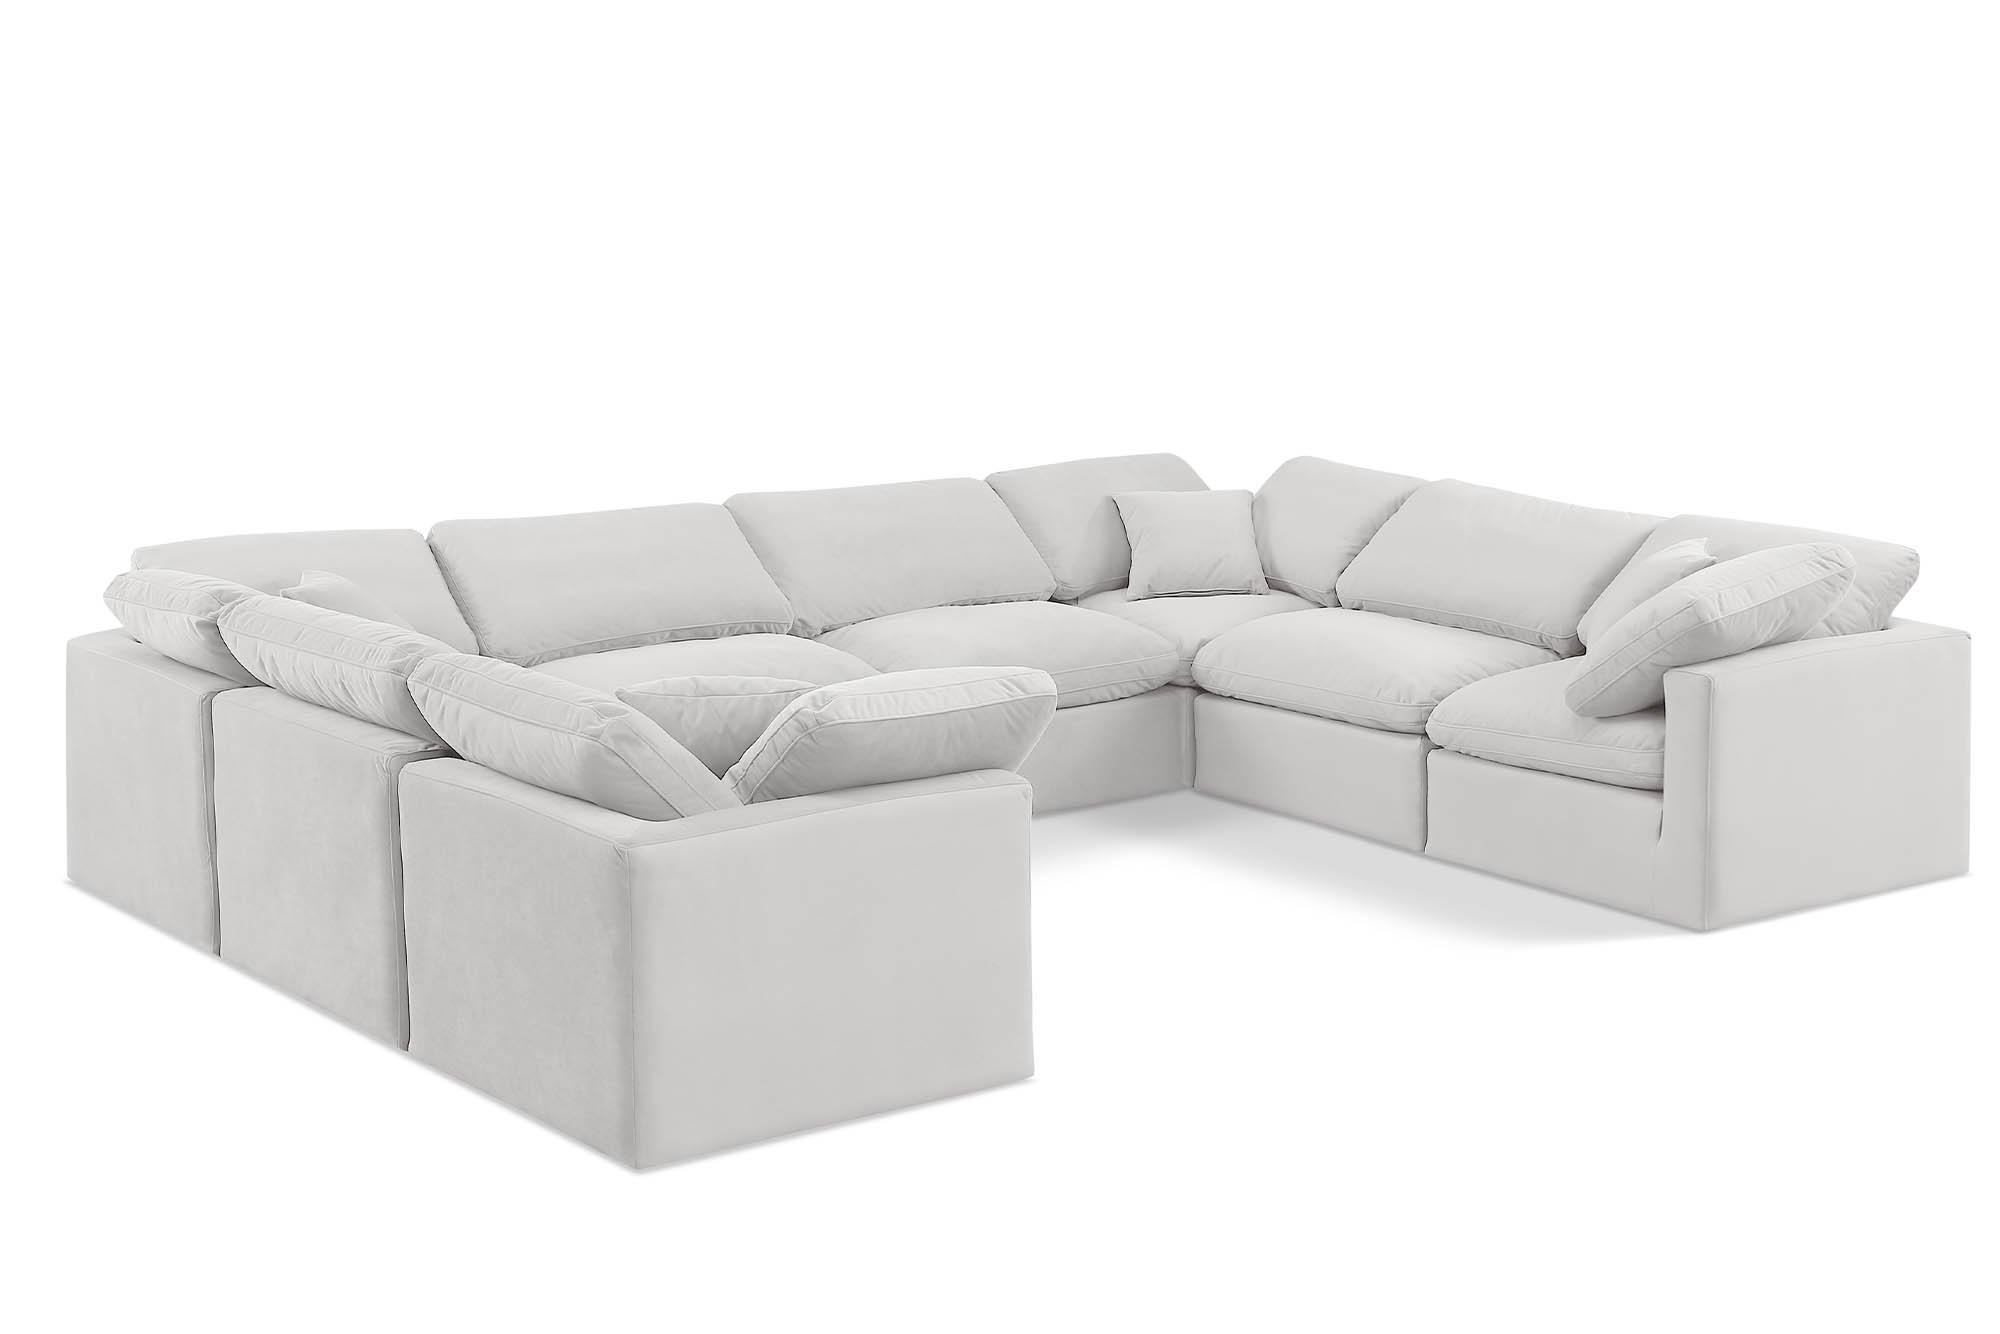 Contemporary, Modern Modular Sectional Sofa INDULGE 147Cream-Sec8A 147Cream-Sec8A in Cream Velvet